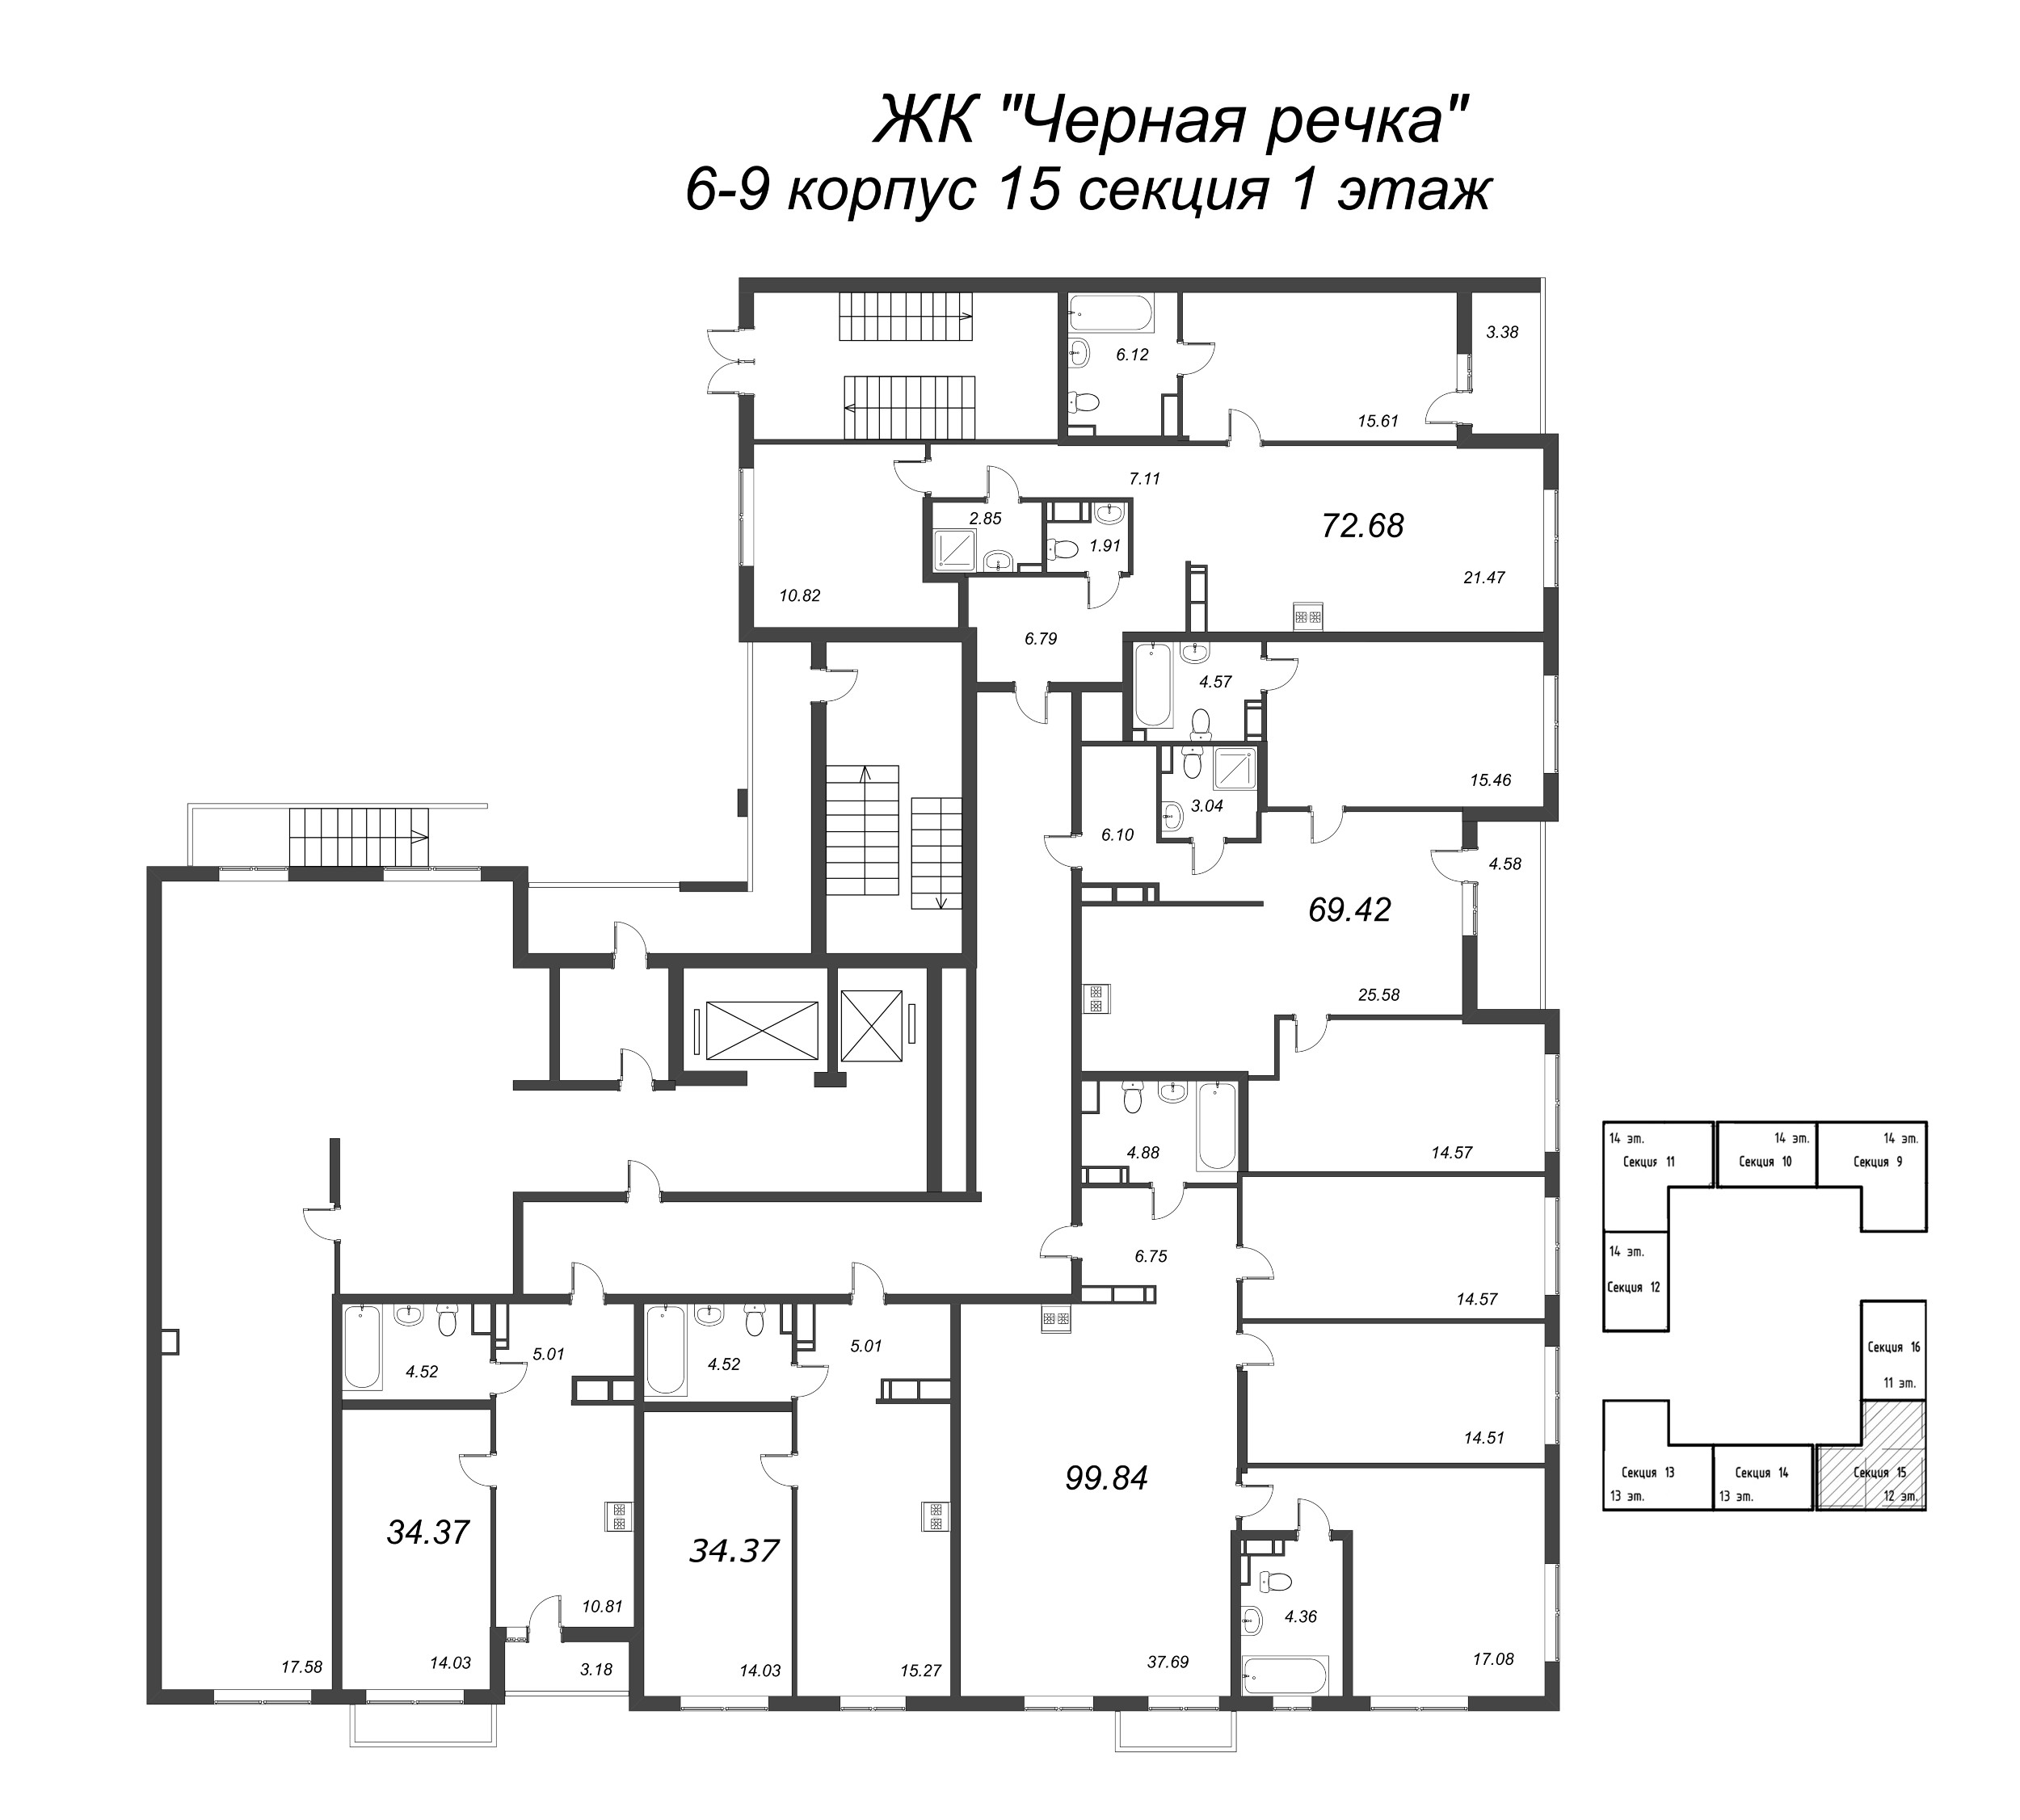 4-комнатная (Евро) квартира, 99.1 м² - планировка этажа